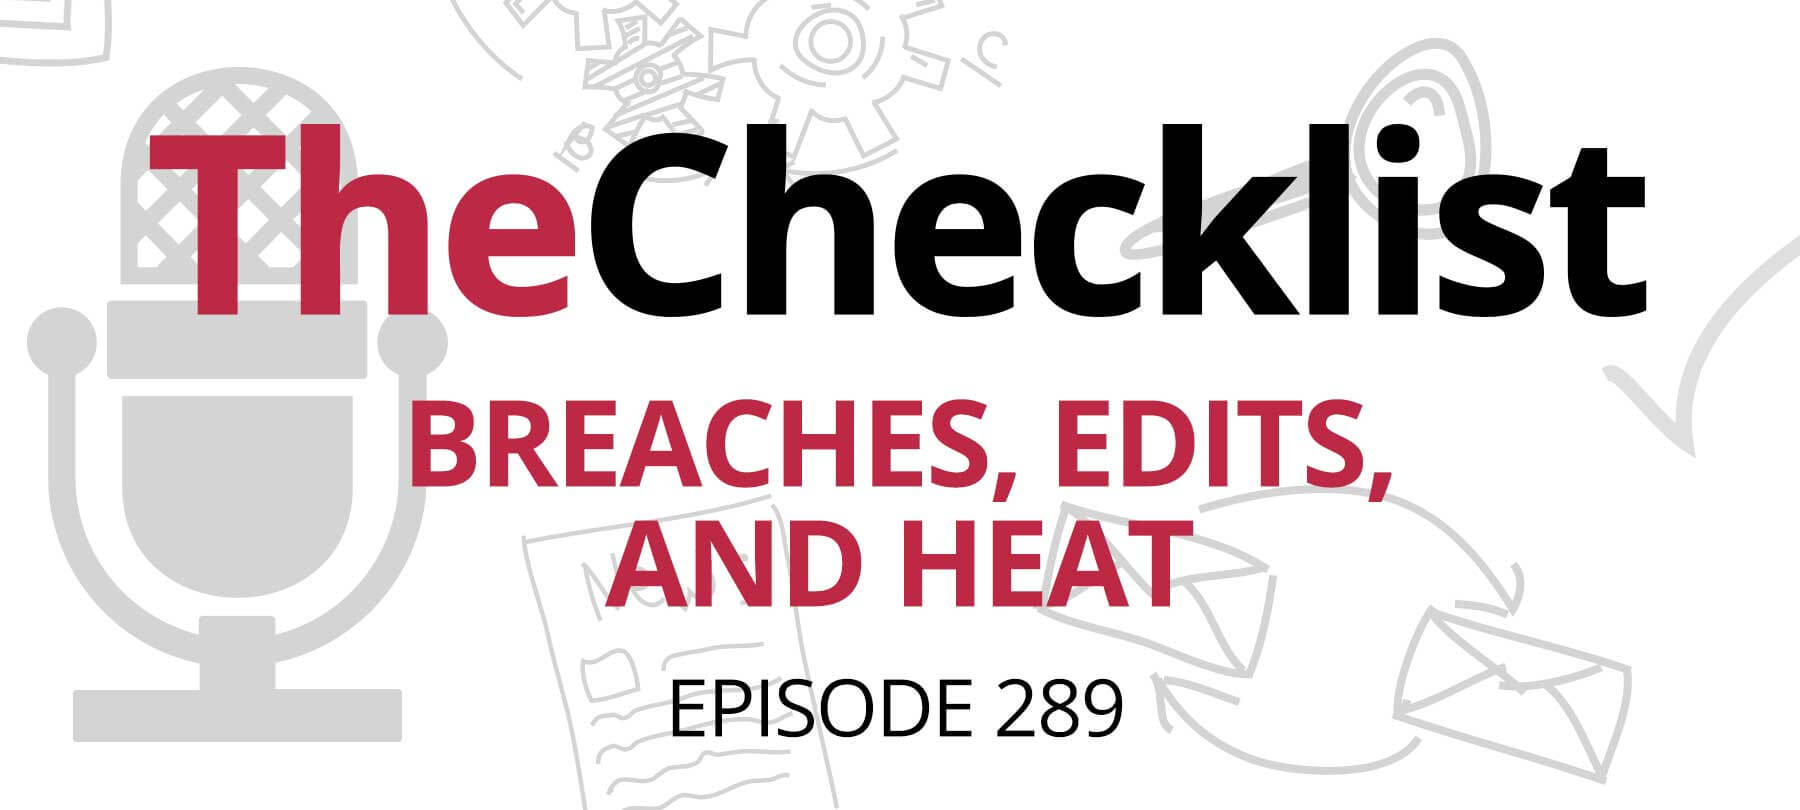 Checklist 289: Breaches, Edits, and Heat